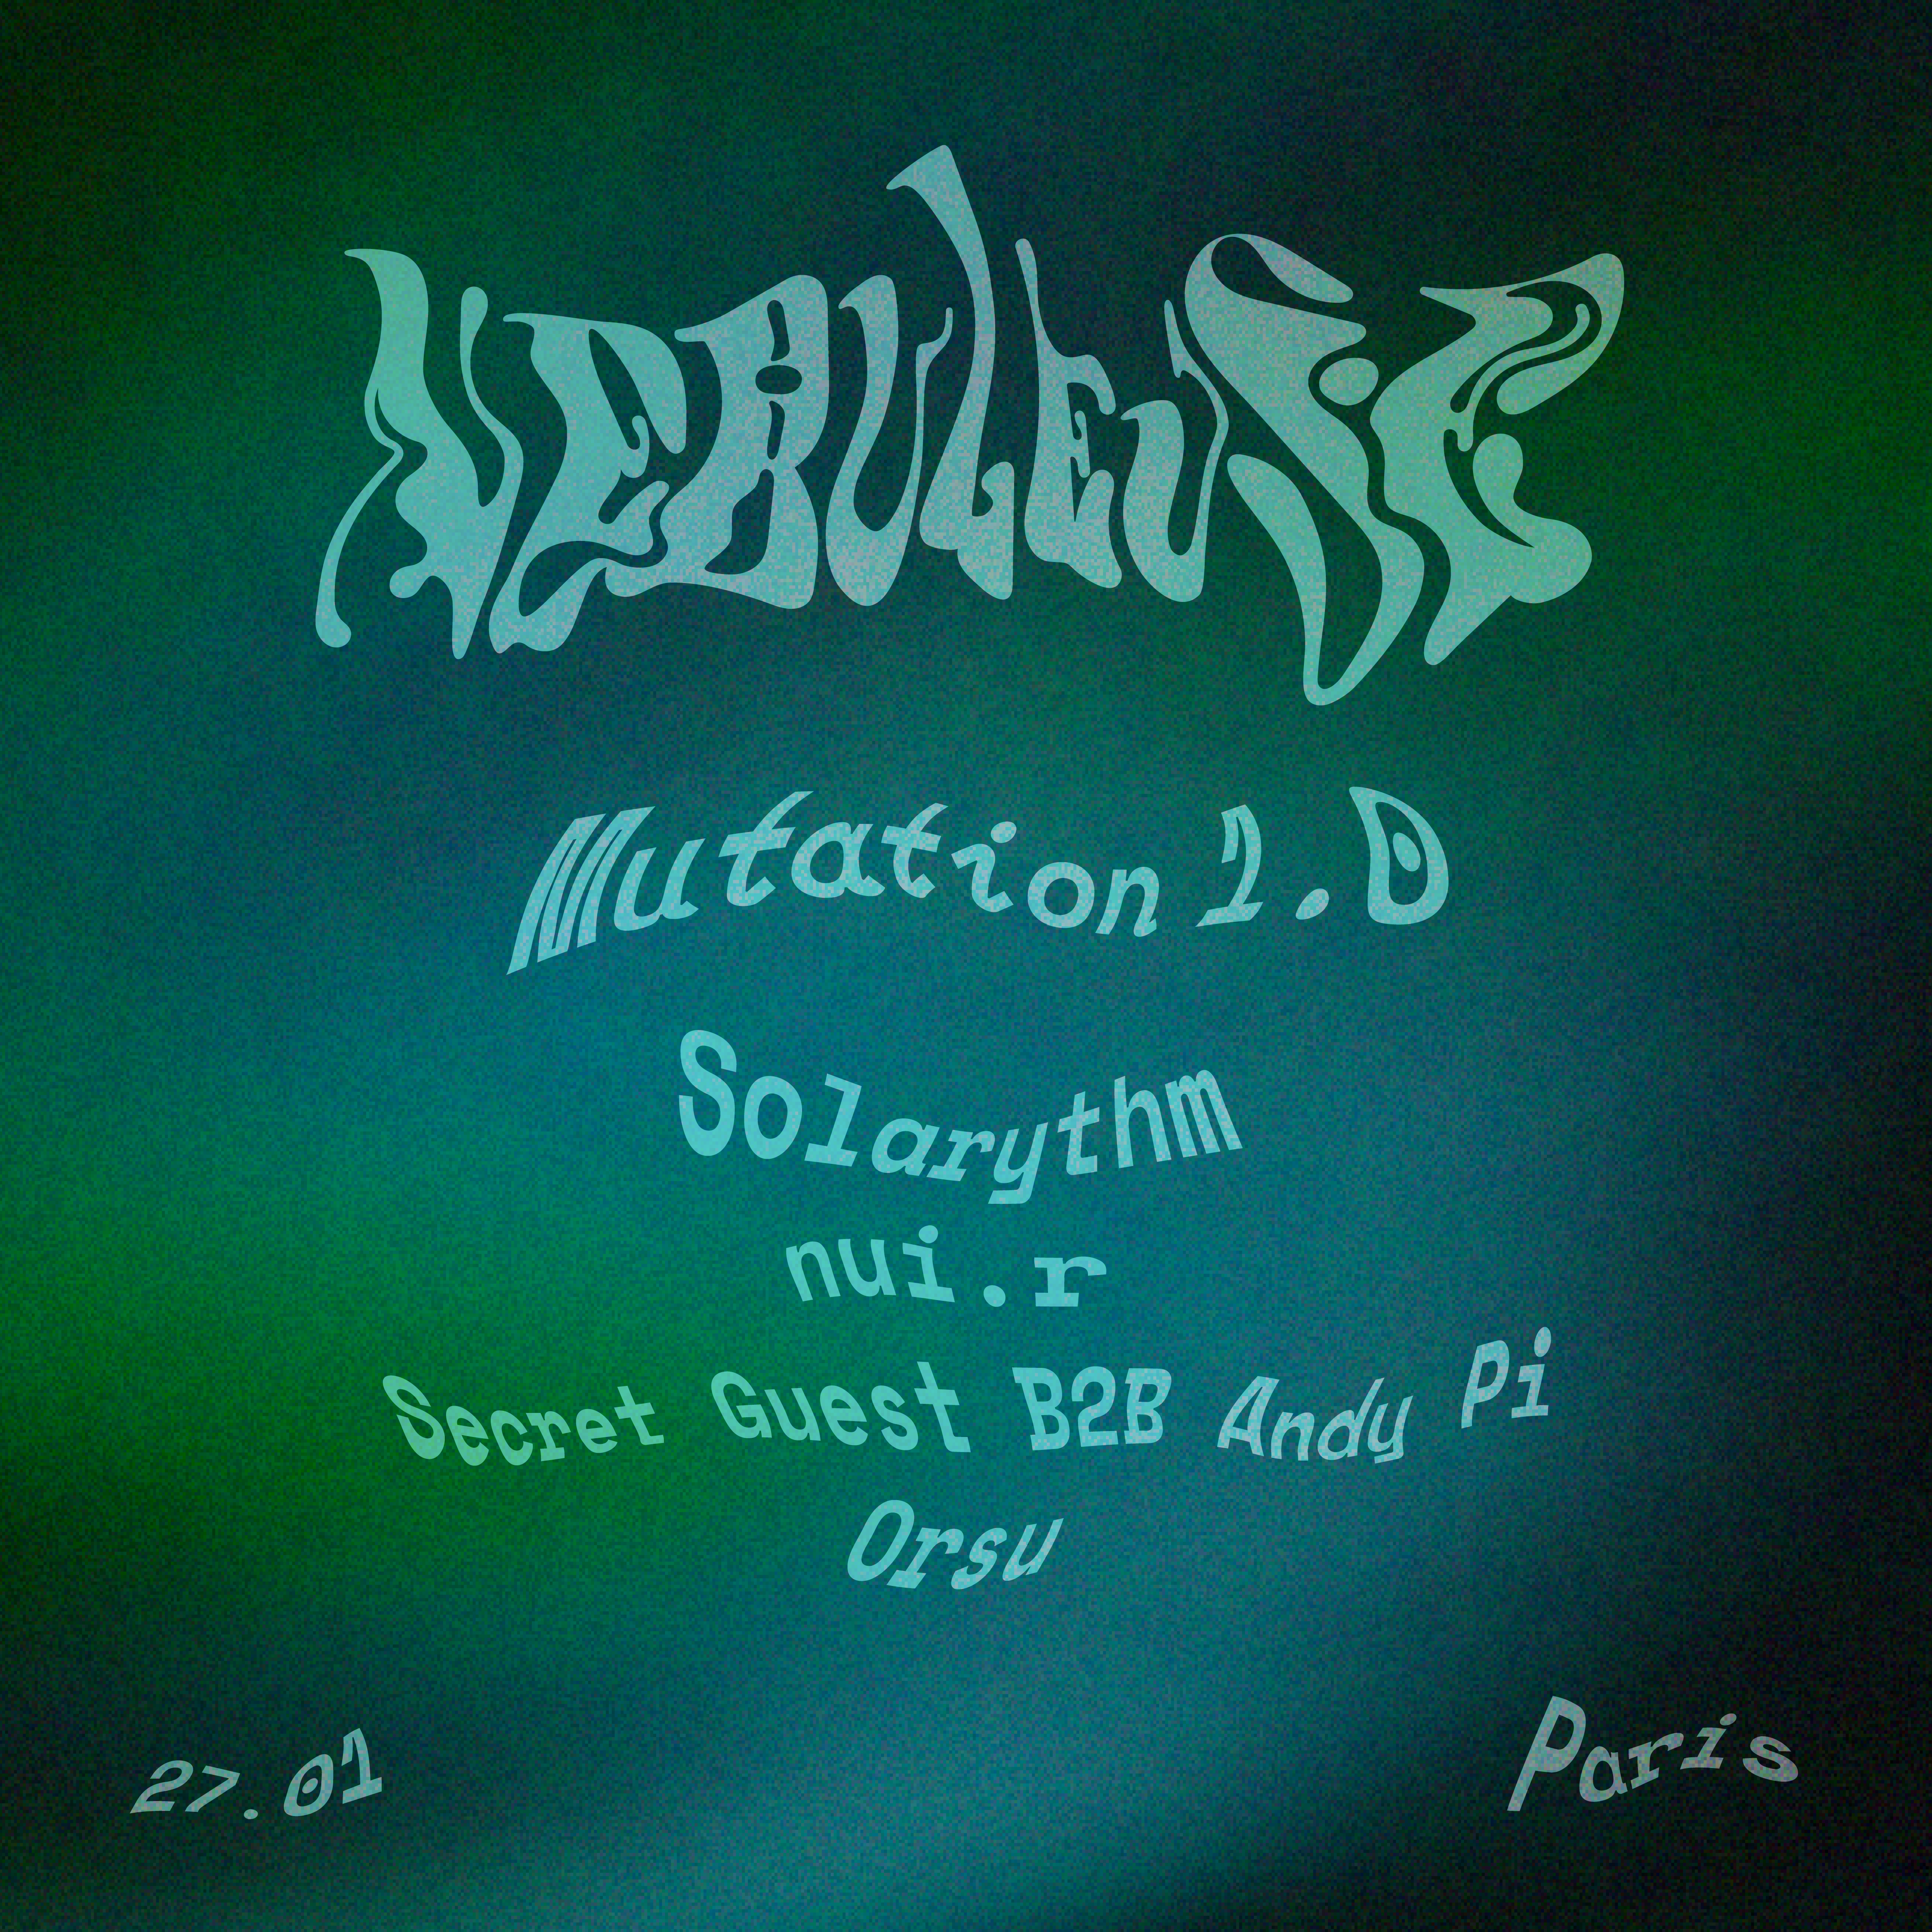 Nébuleuse: Mutation 1.0 w/ Solarythm, nui.r, Andy Pi, Orsu & Secret Guest - フライヤー裏